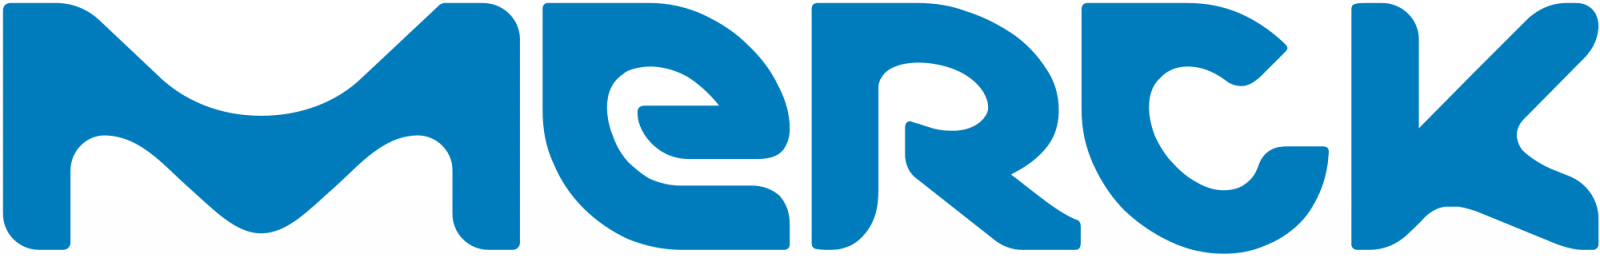 Merck Logo Isara Conseil